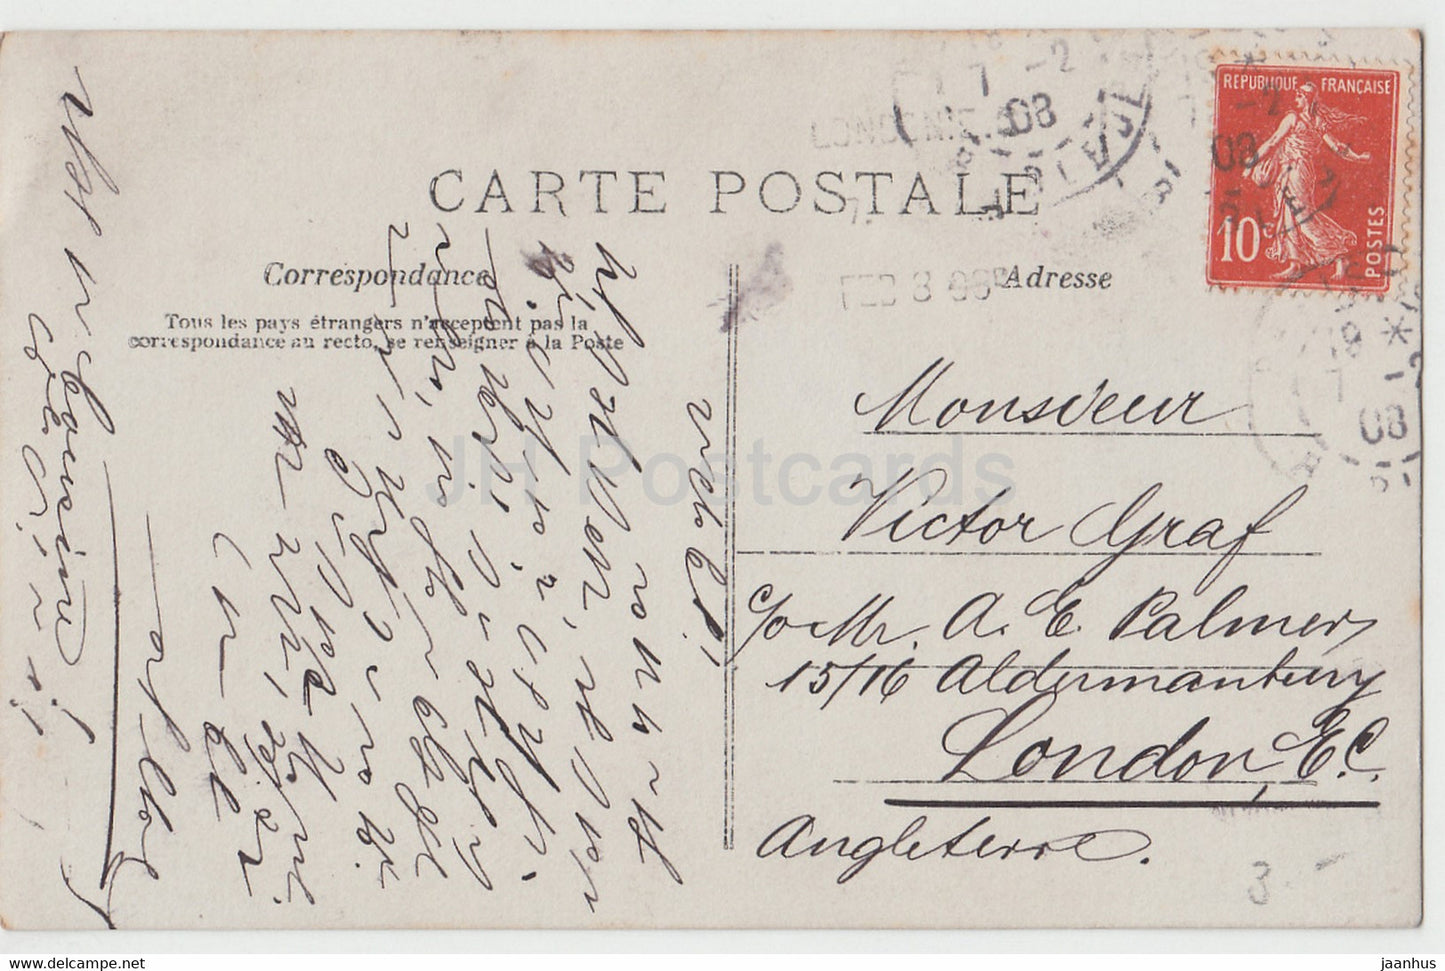 Frau – Botschafterin an Bonheur – Taube – Vögel – 643 – alte Postkarte – Frankreich – 1908 – gebraucht